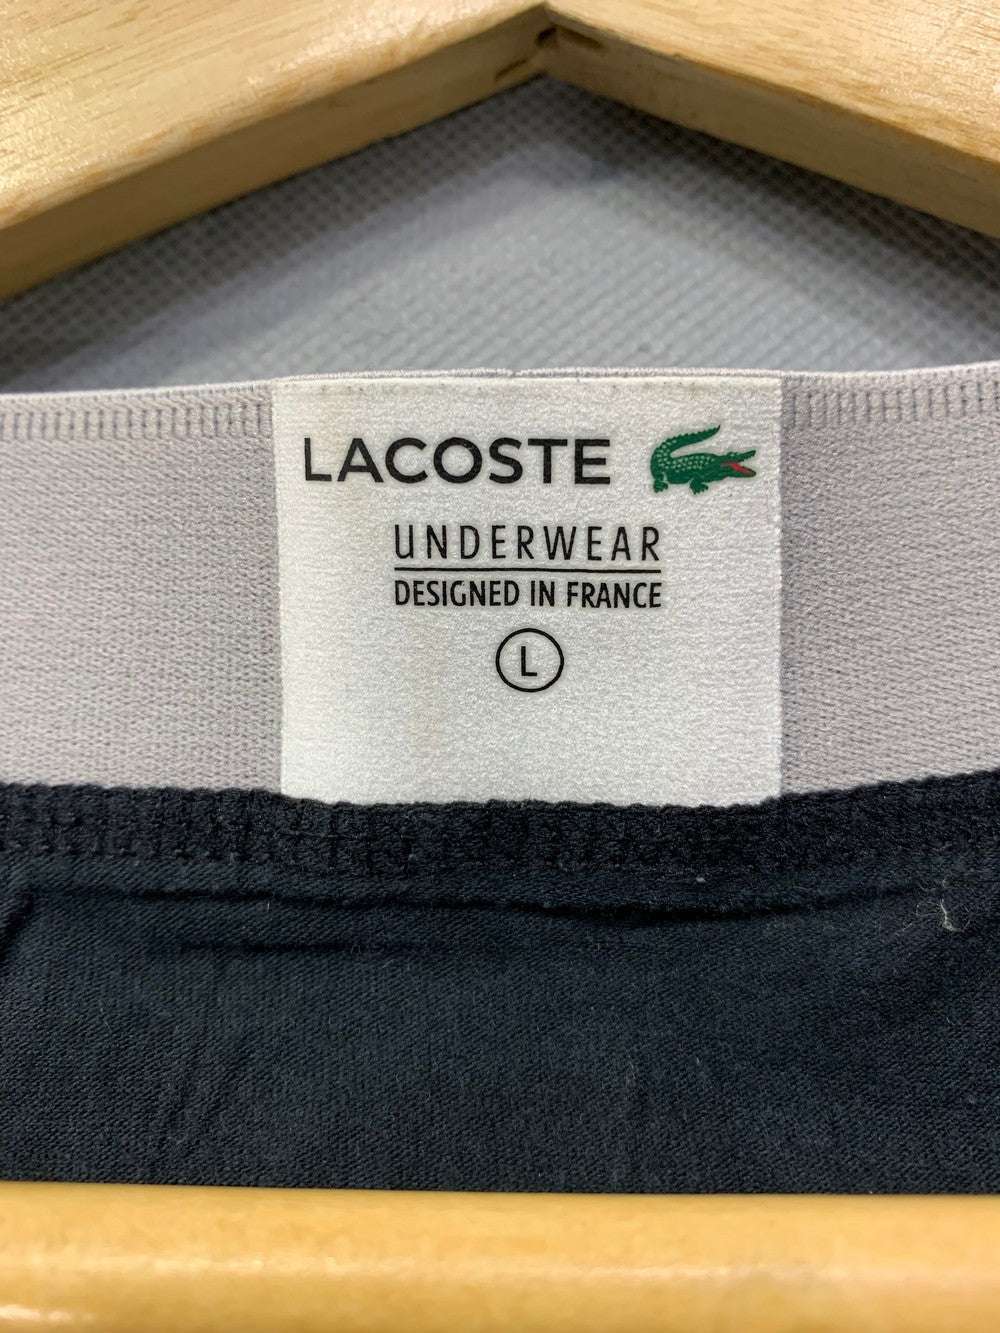 Lacoste Original Branded Boxer Underwear For Men